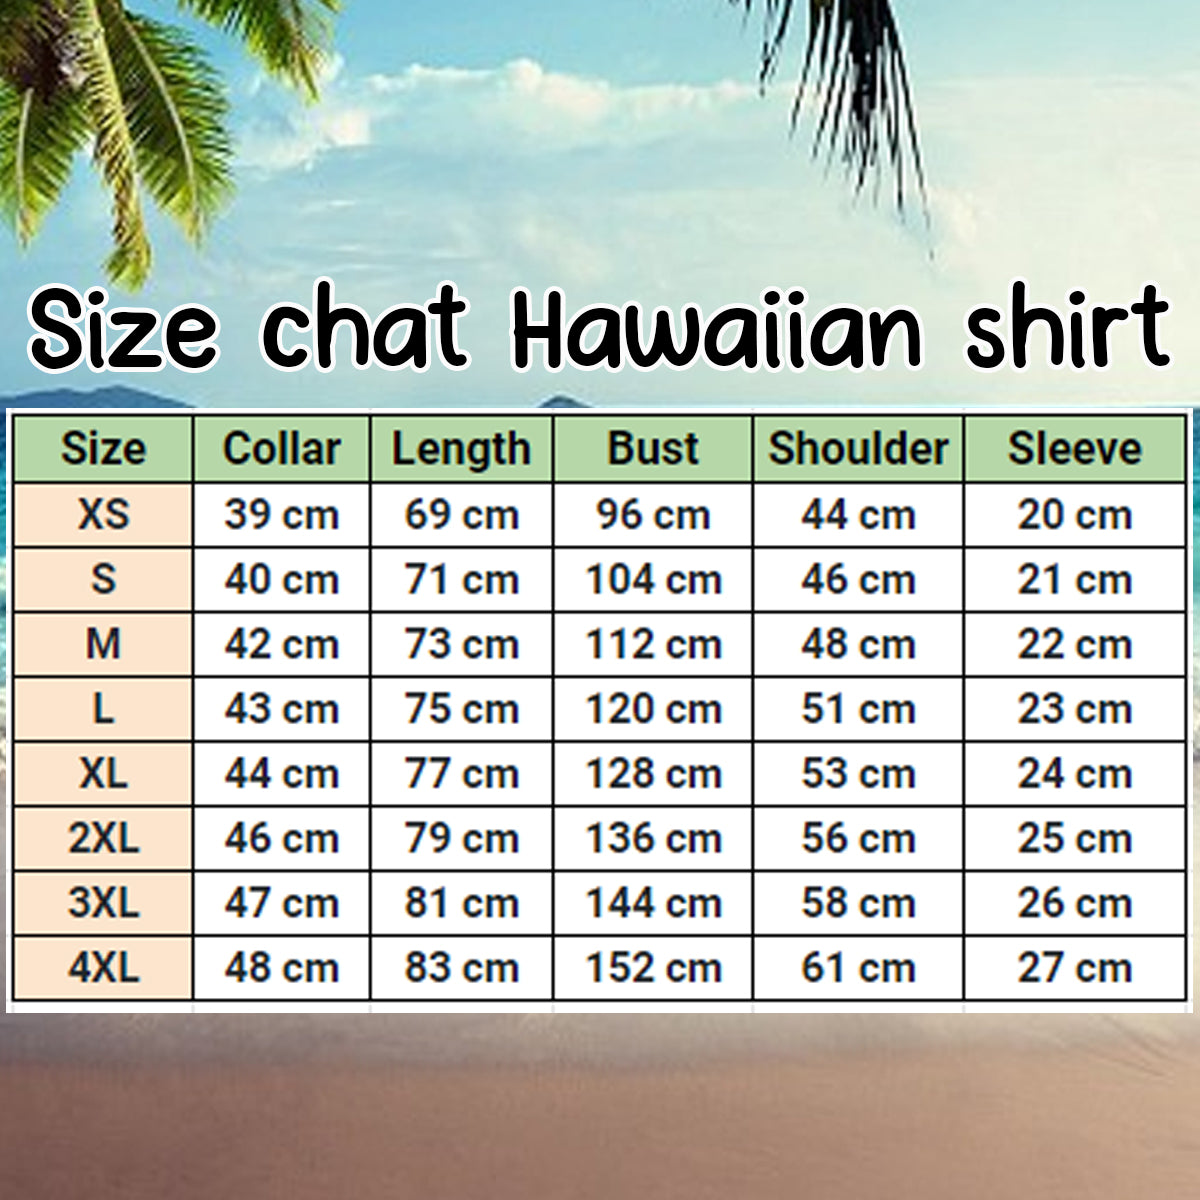 Yellow Glasses Dog Coolest Surf Rider Art Pattern Hawaiian Shirt